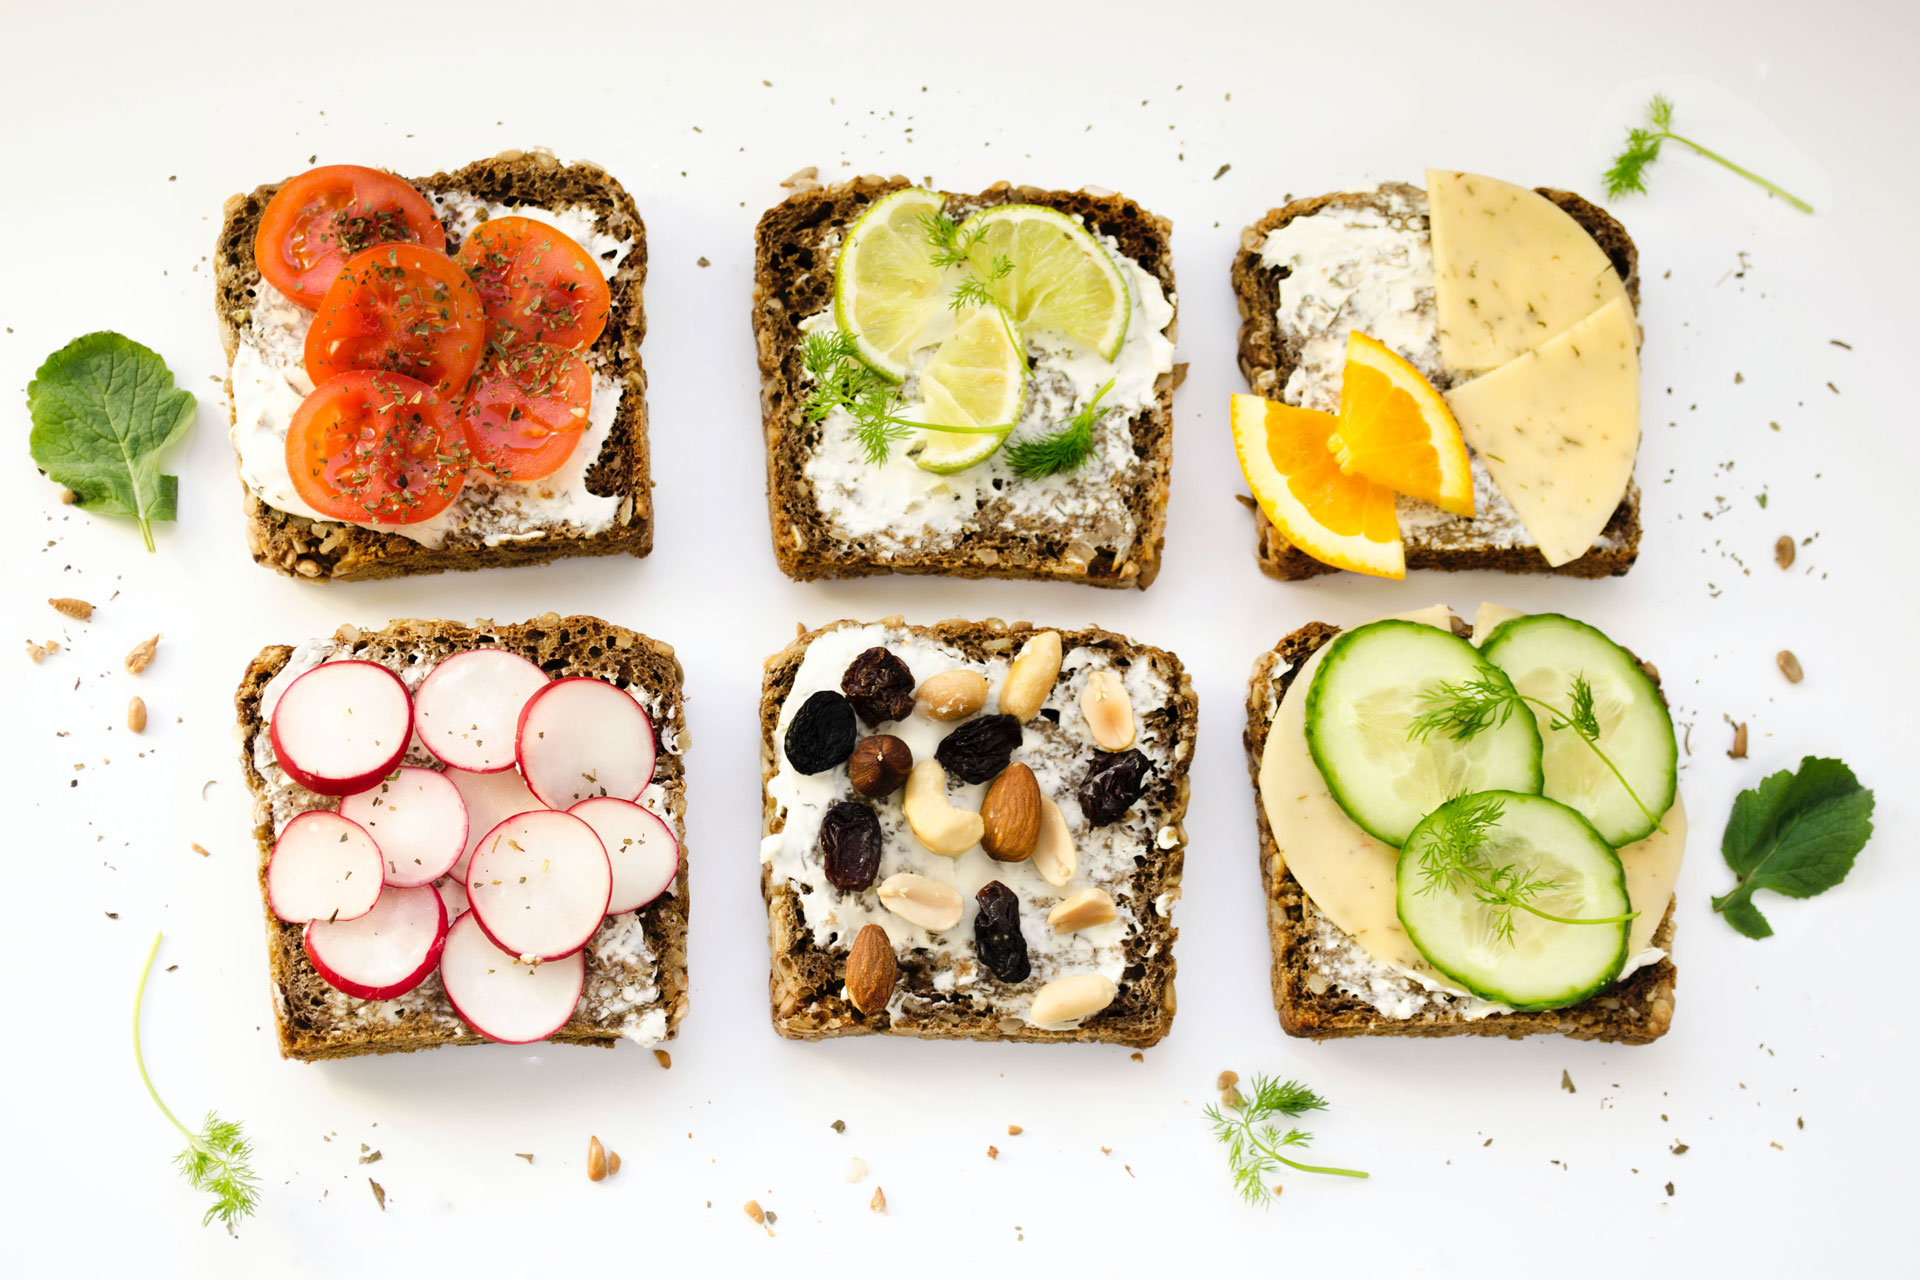 healthy sandwich ideas Photo by Ola Mishchenko on Unsplash